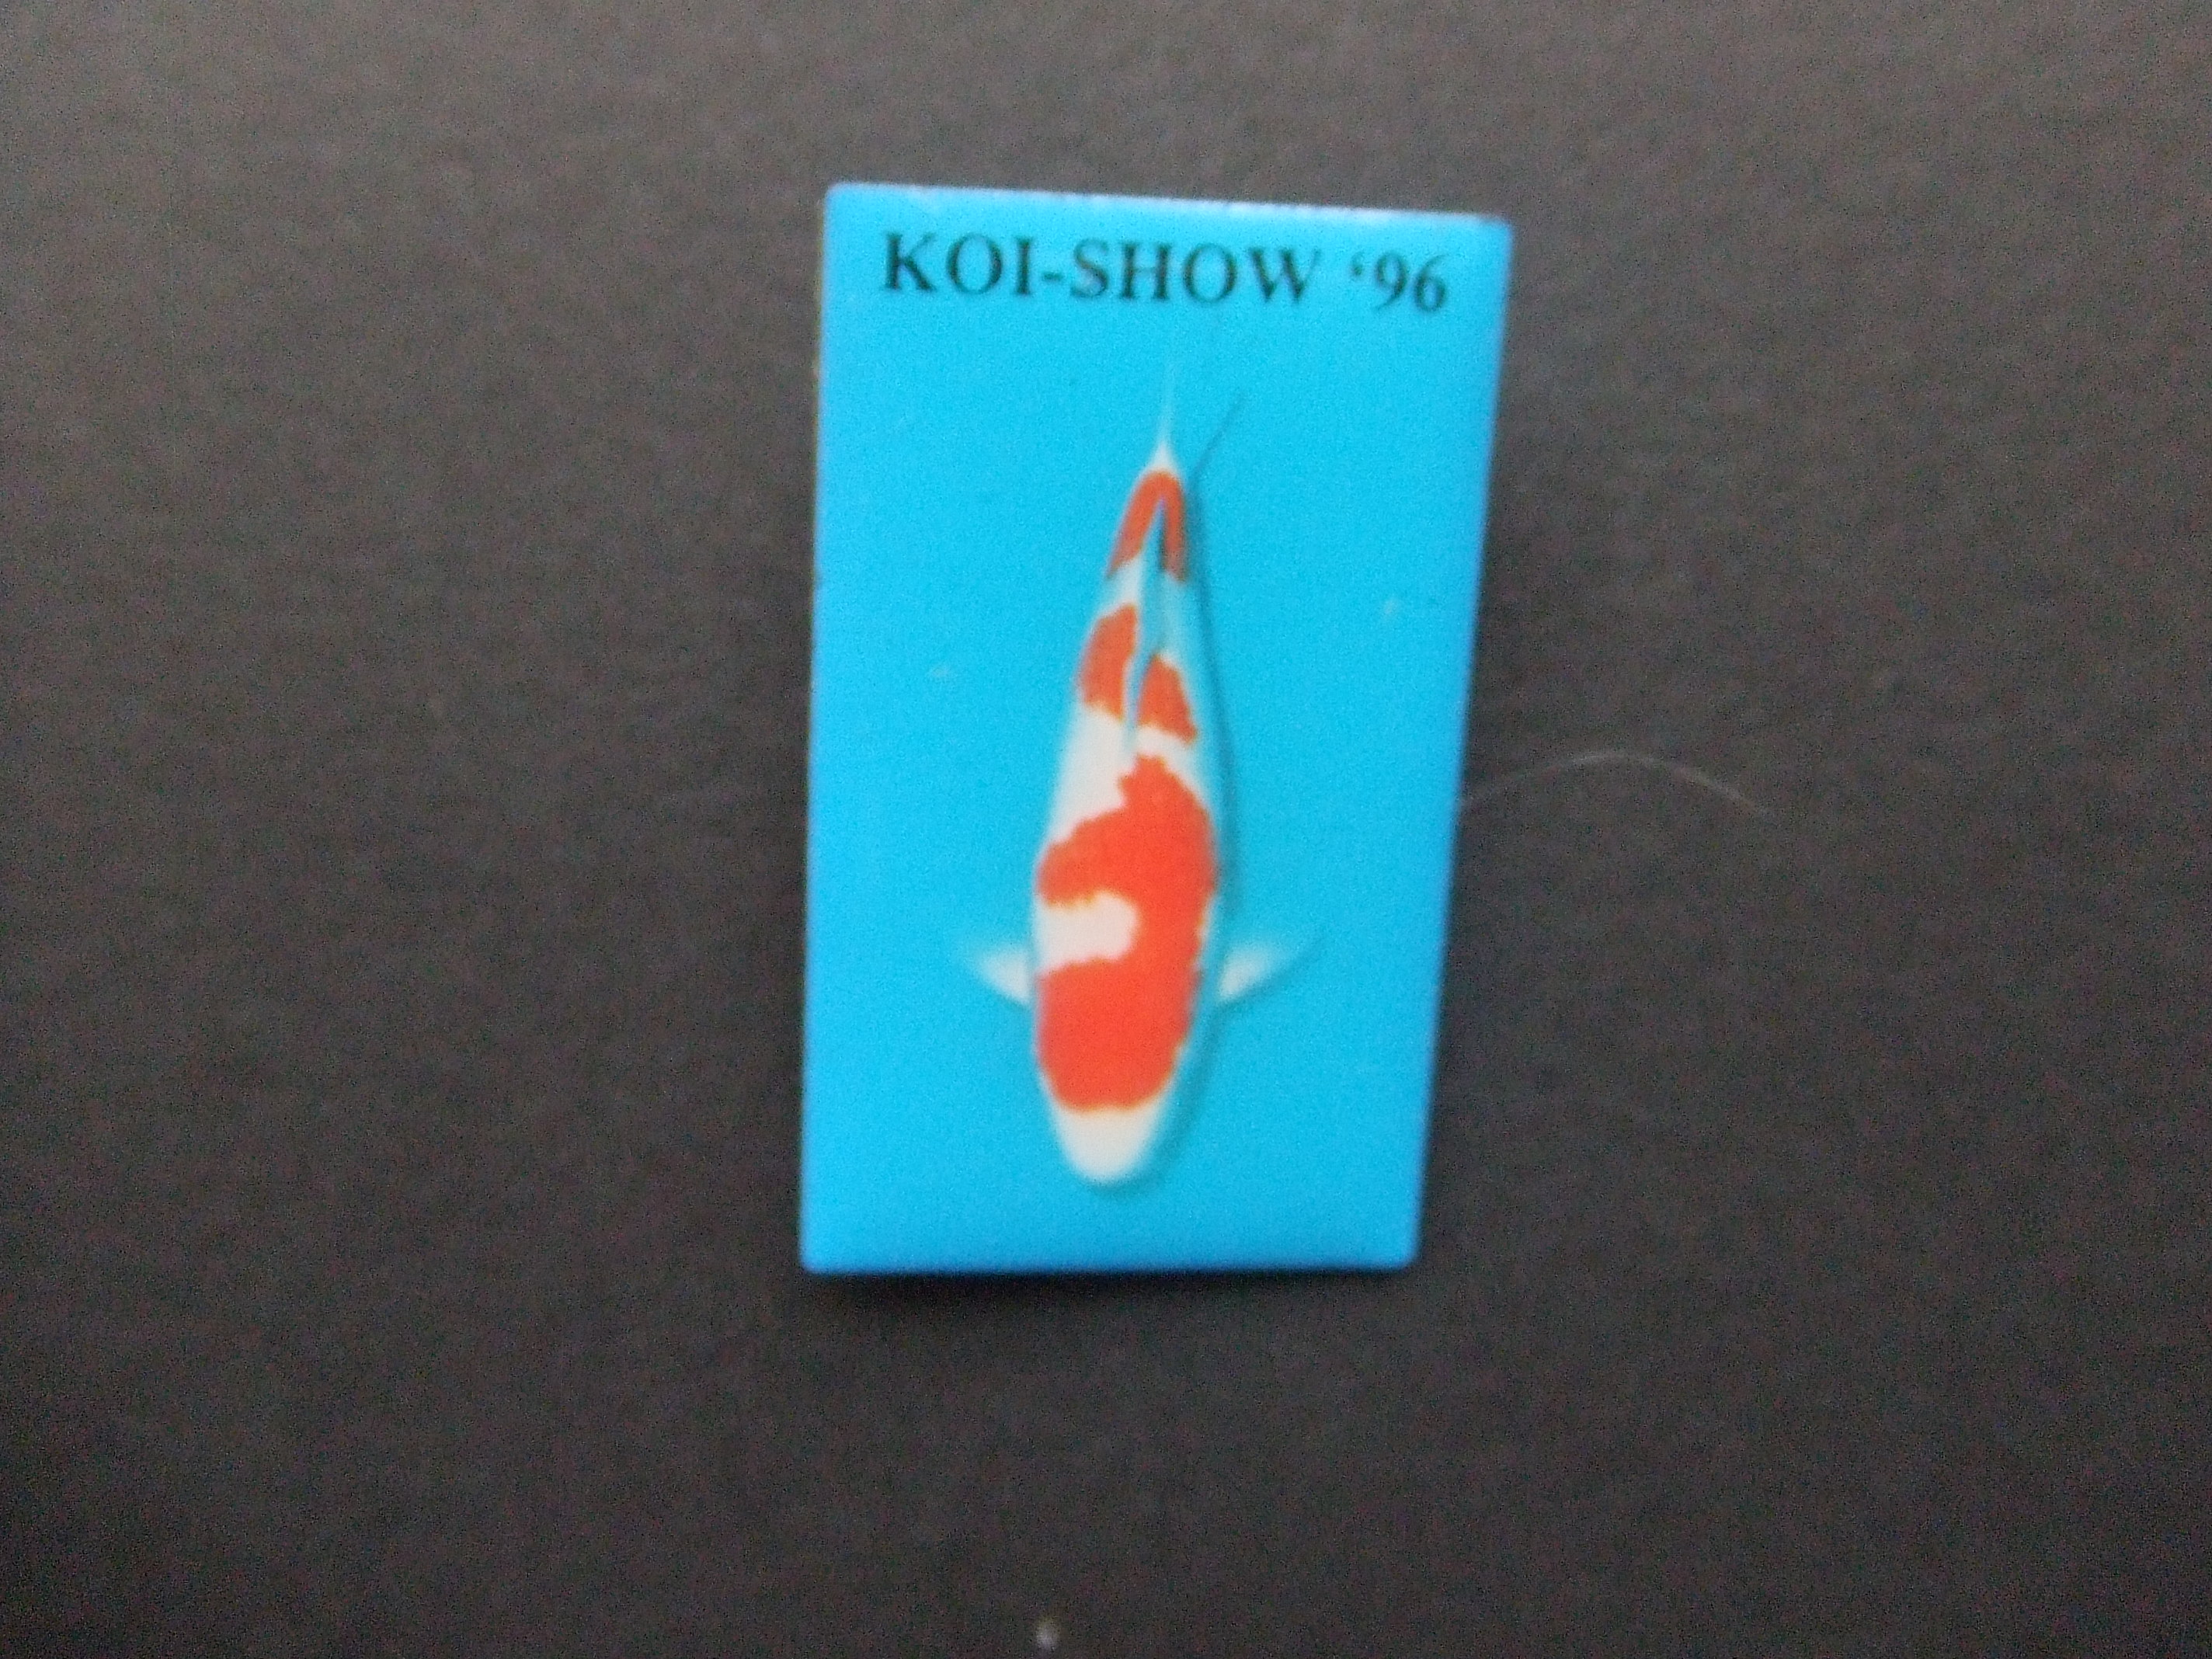 Koi karpers  holland koi show 1996